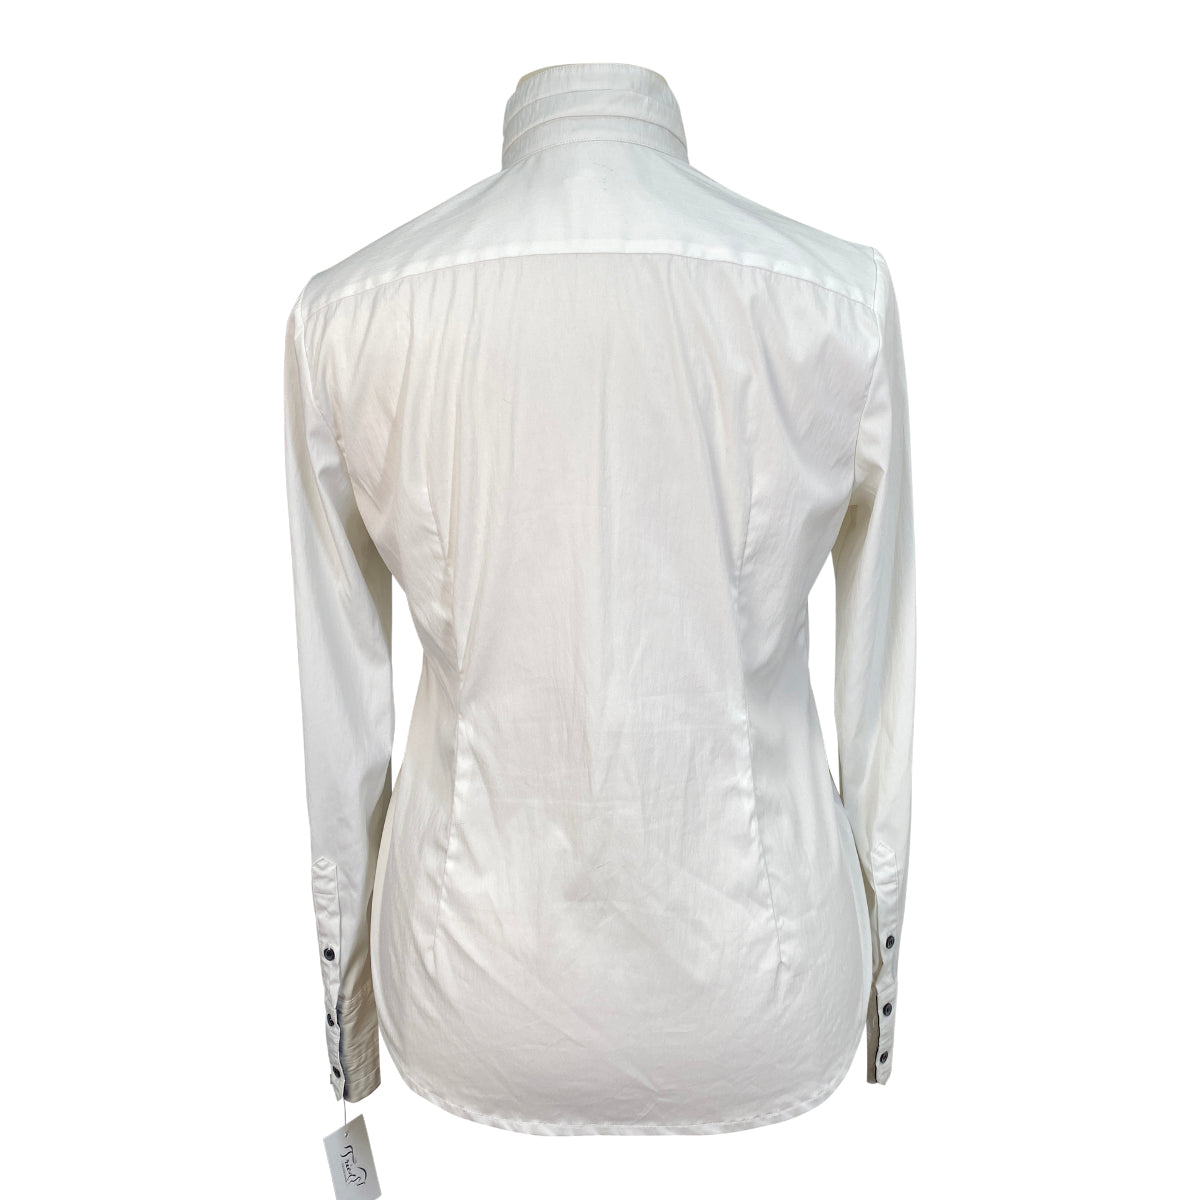 Asmar Equestrian Long Sleeve Show Shirt in White